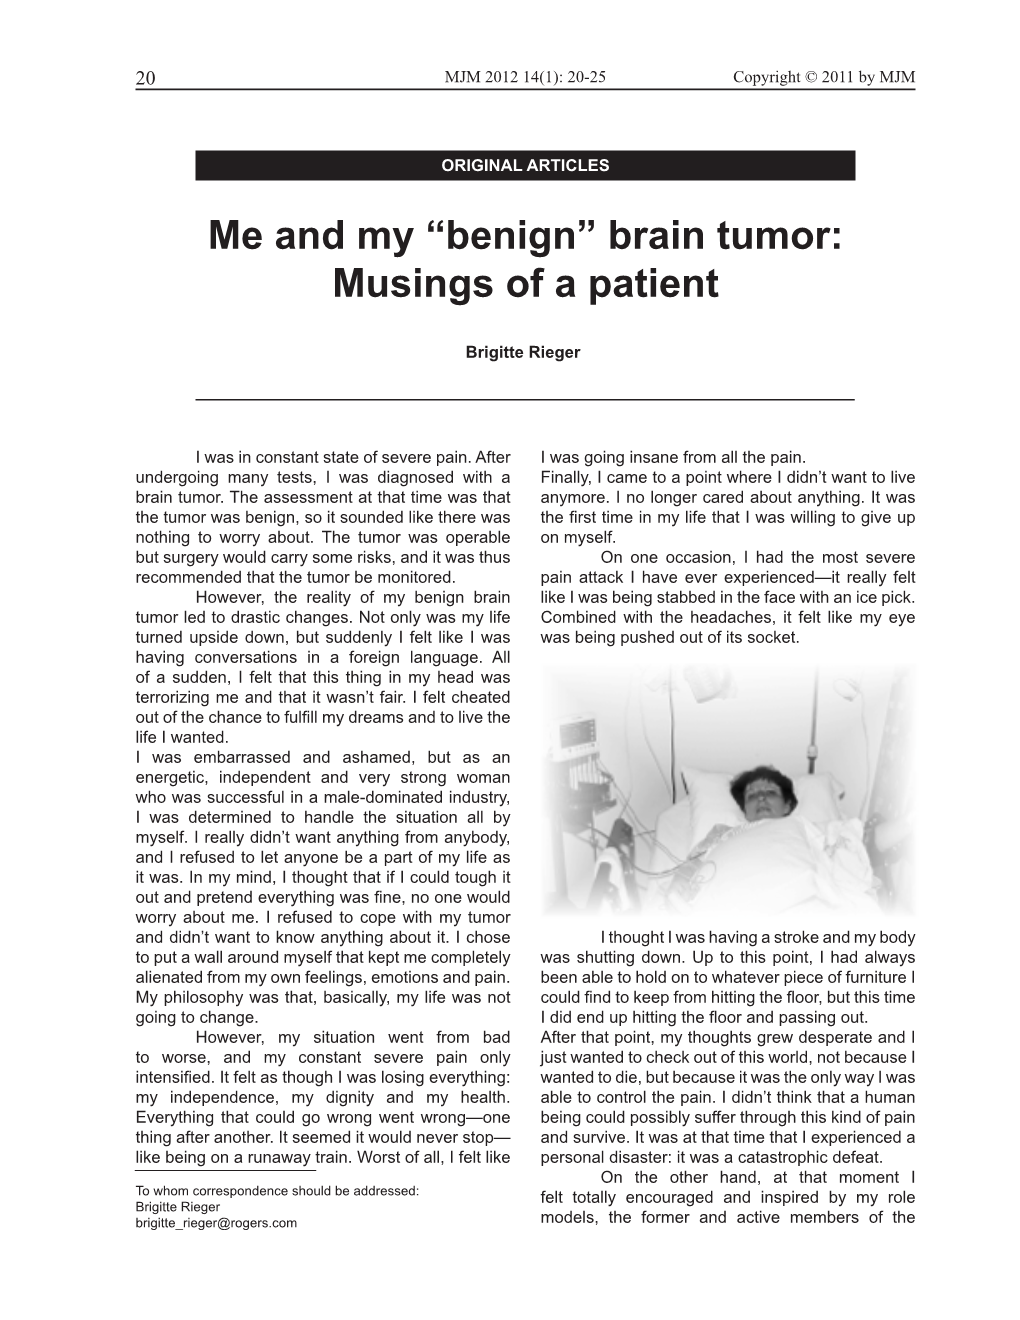 Brain Tumor: Musings of a Patient